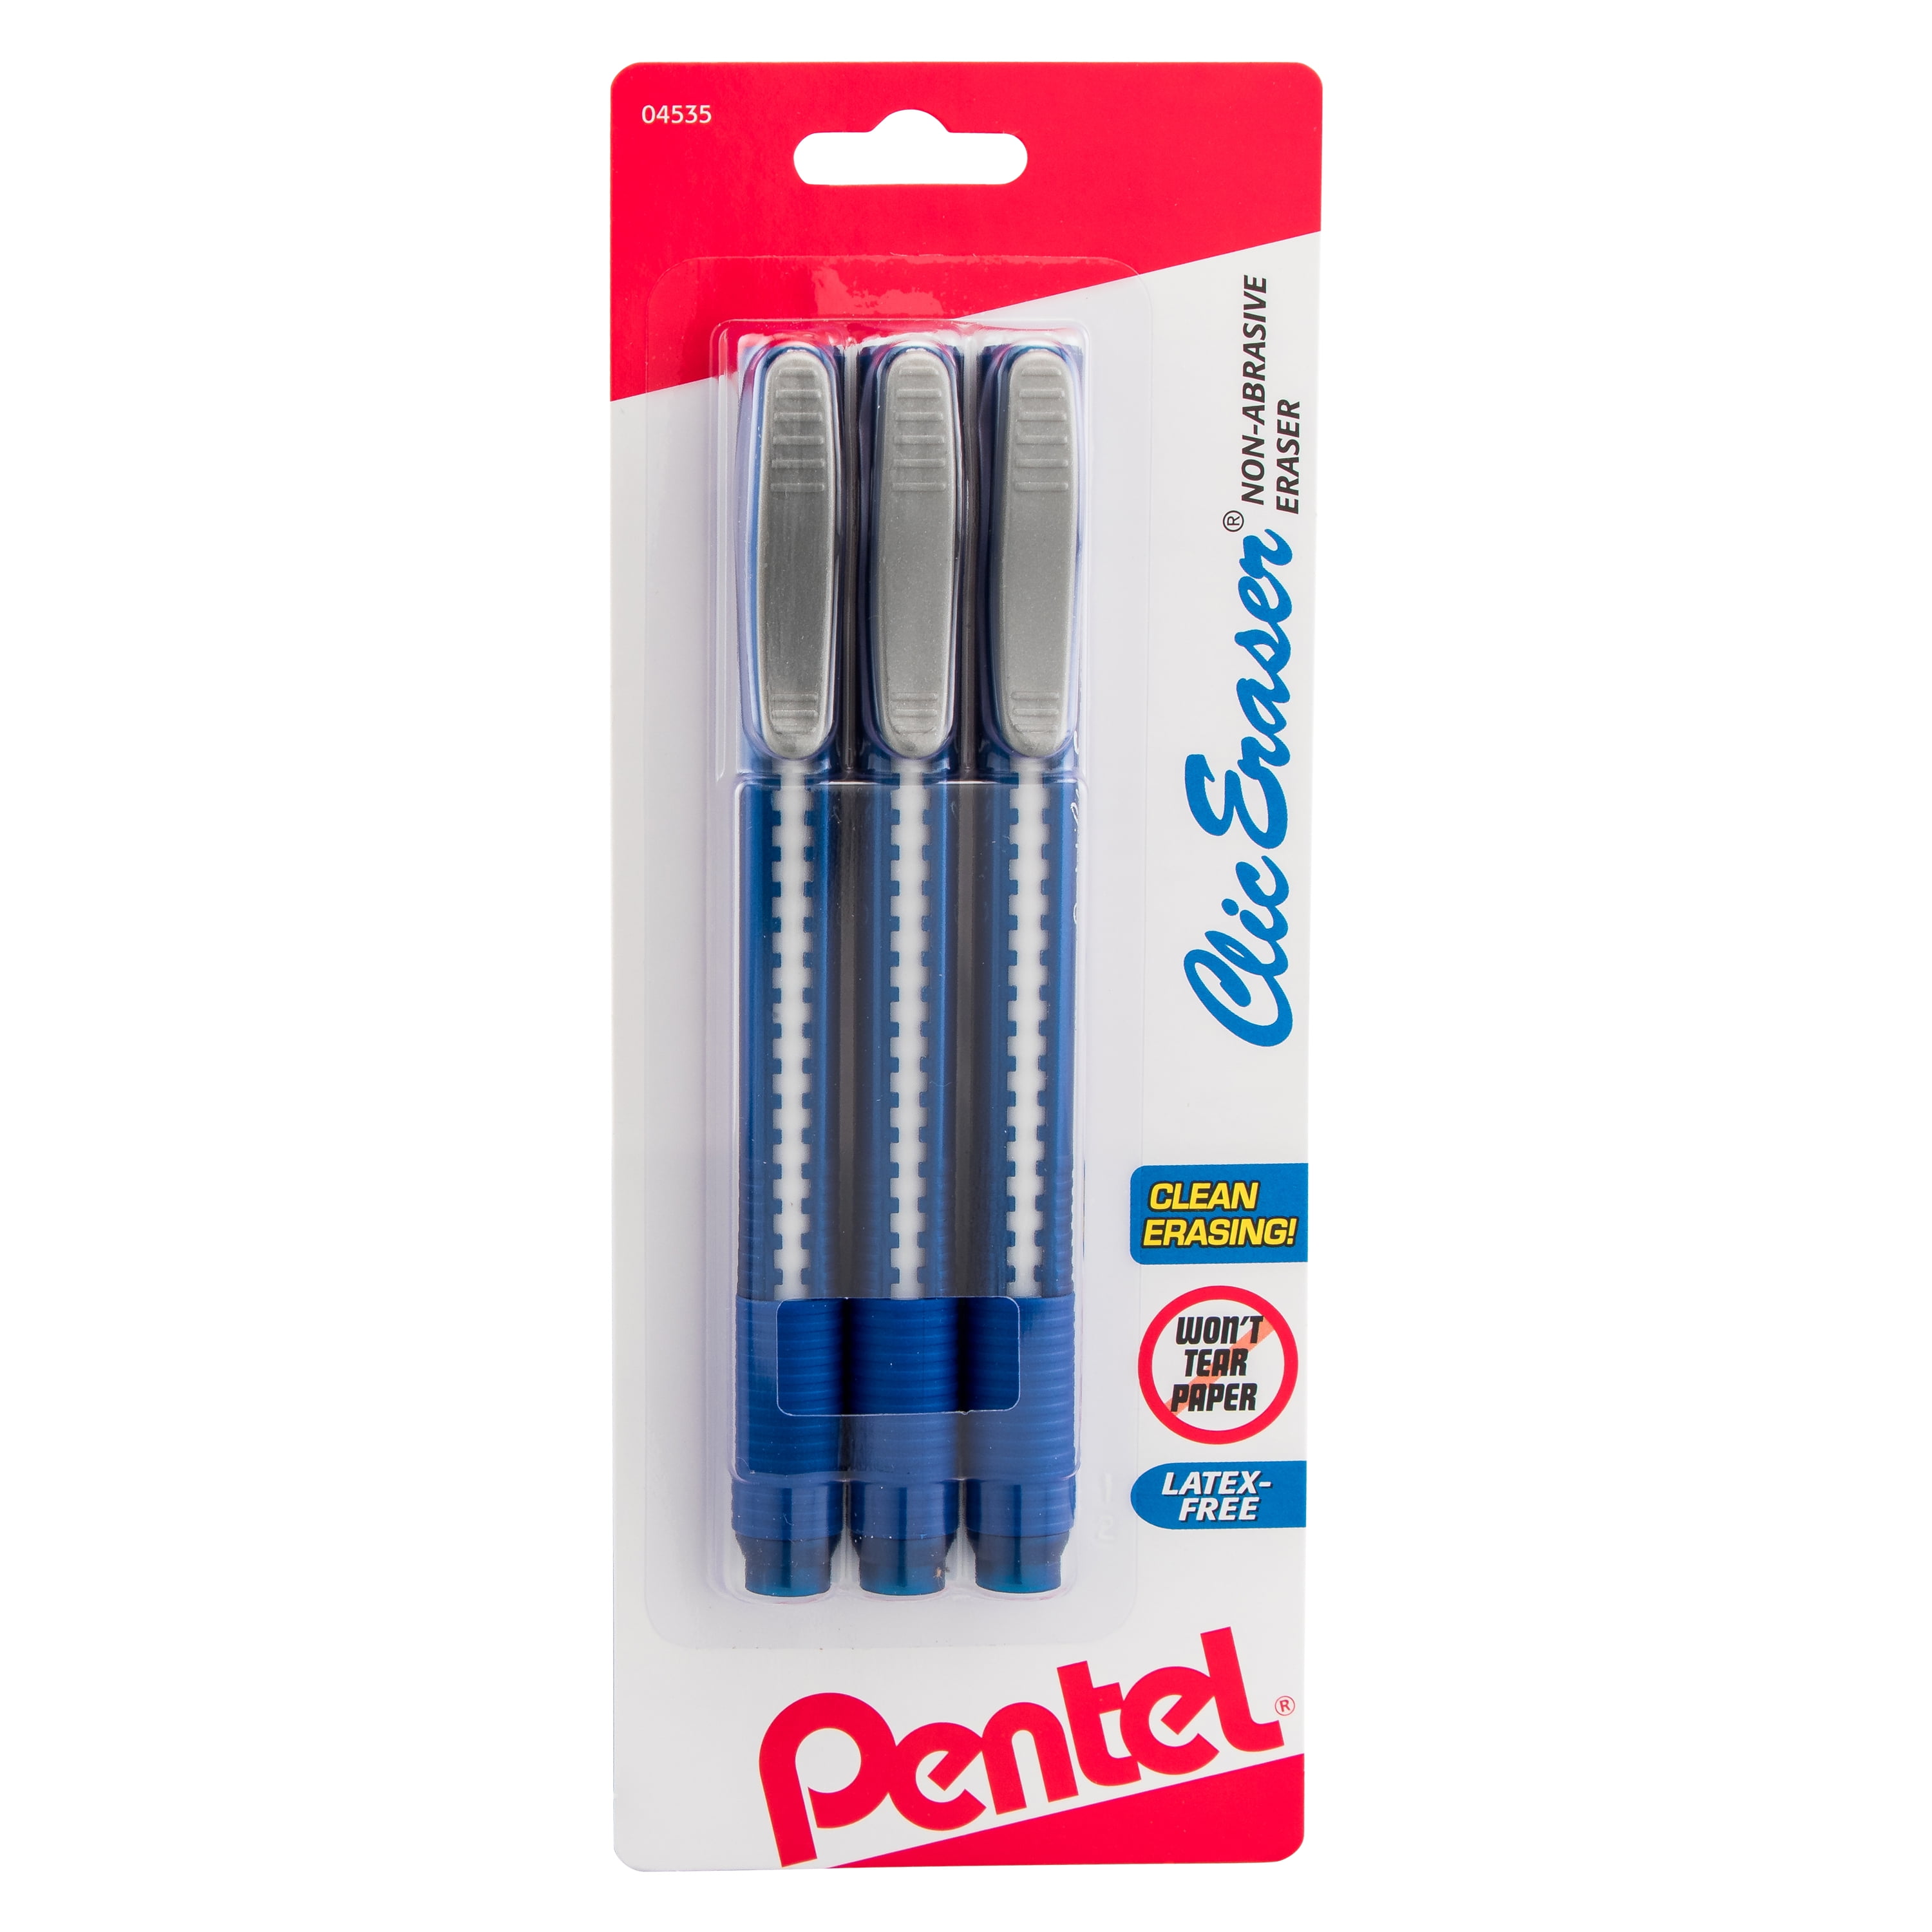 Pentel Vintage ZE21T Clic Erasers NEW OLD STOCK BLUE-Older Style 